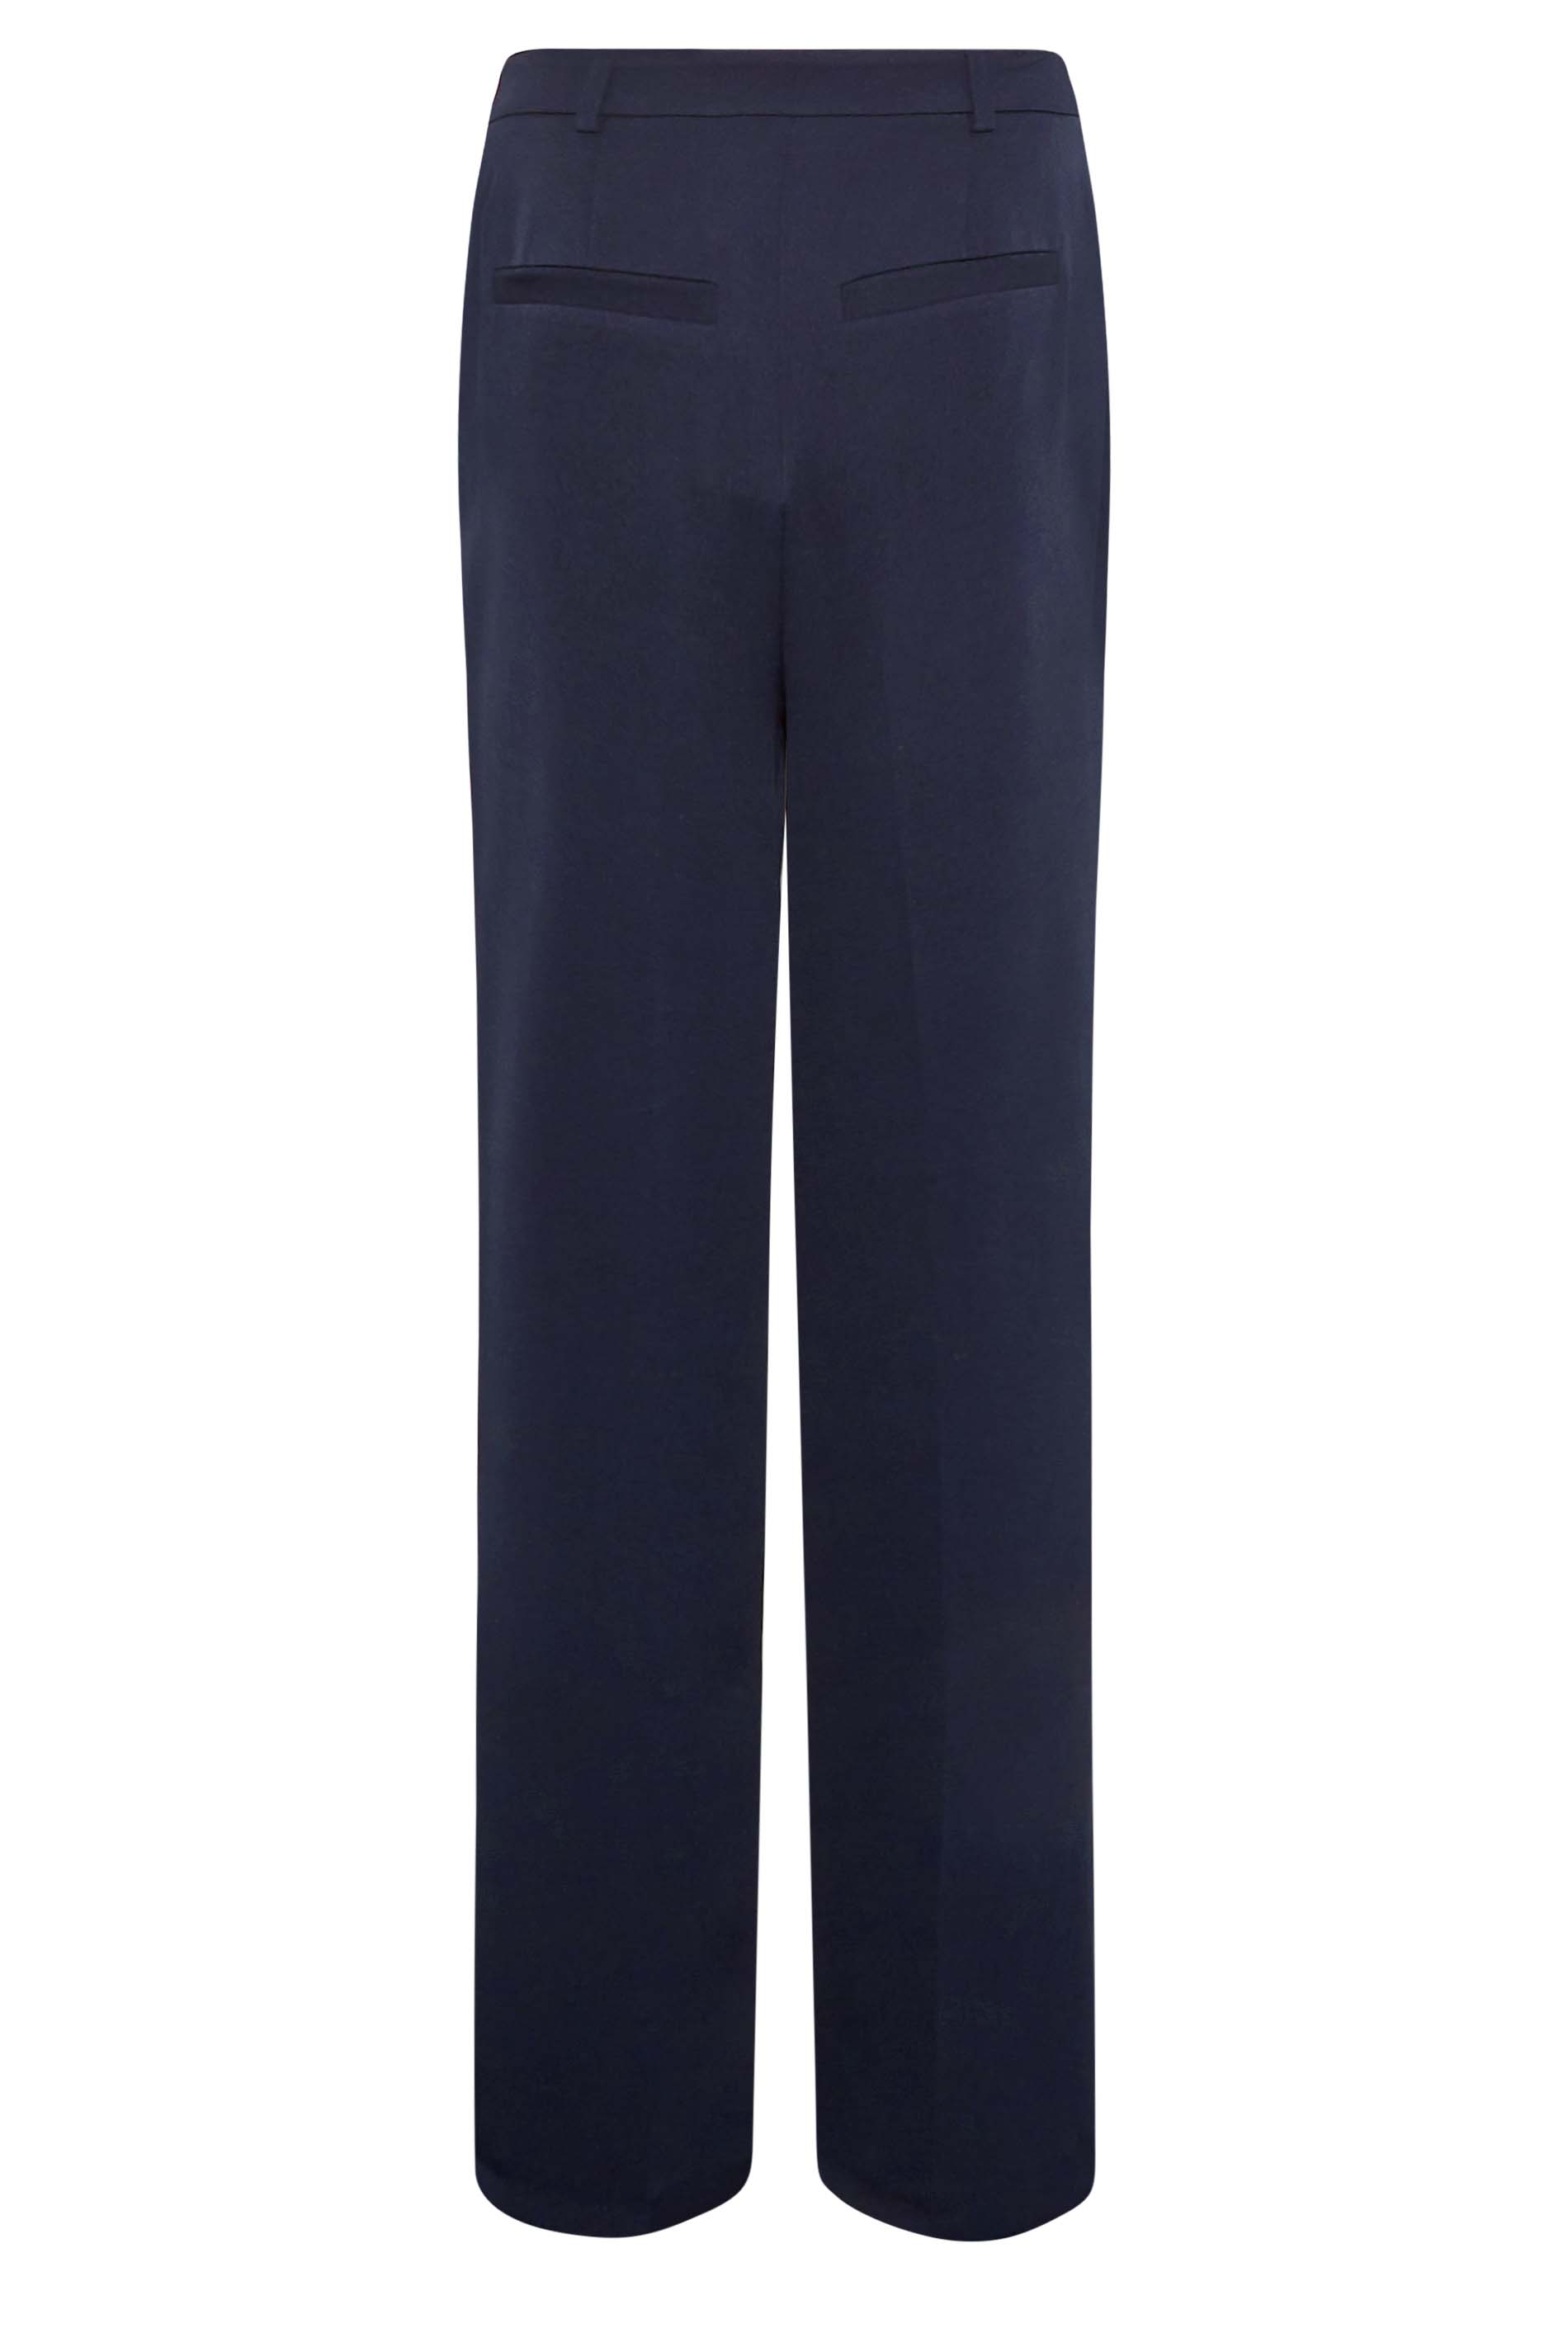 LTS Tall Women's Navy Blue Split Hem Wide Leg Trousers | Long Tall Sally 3